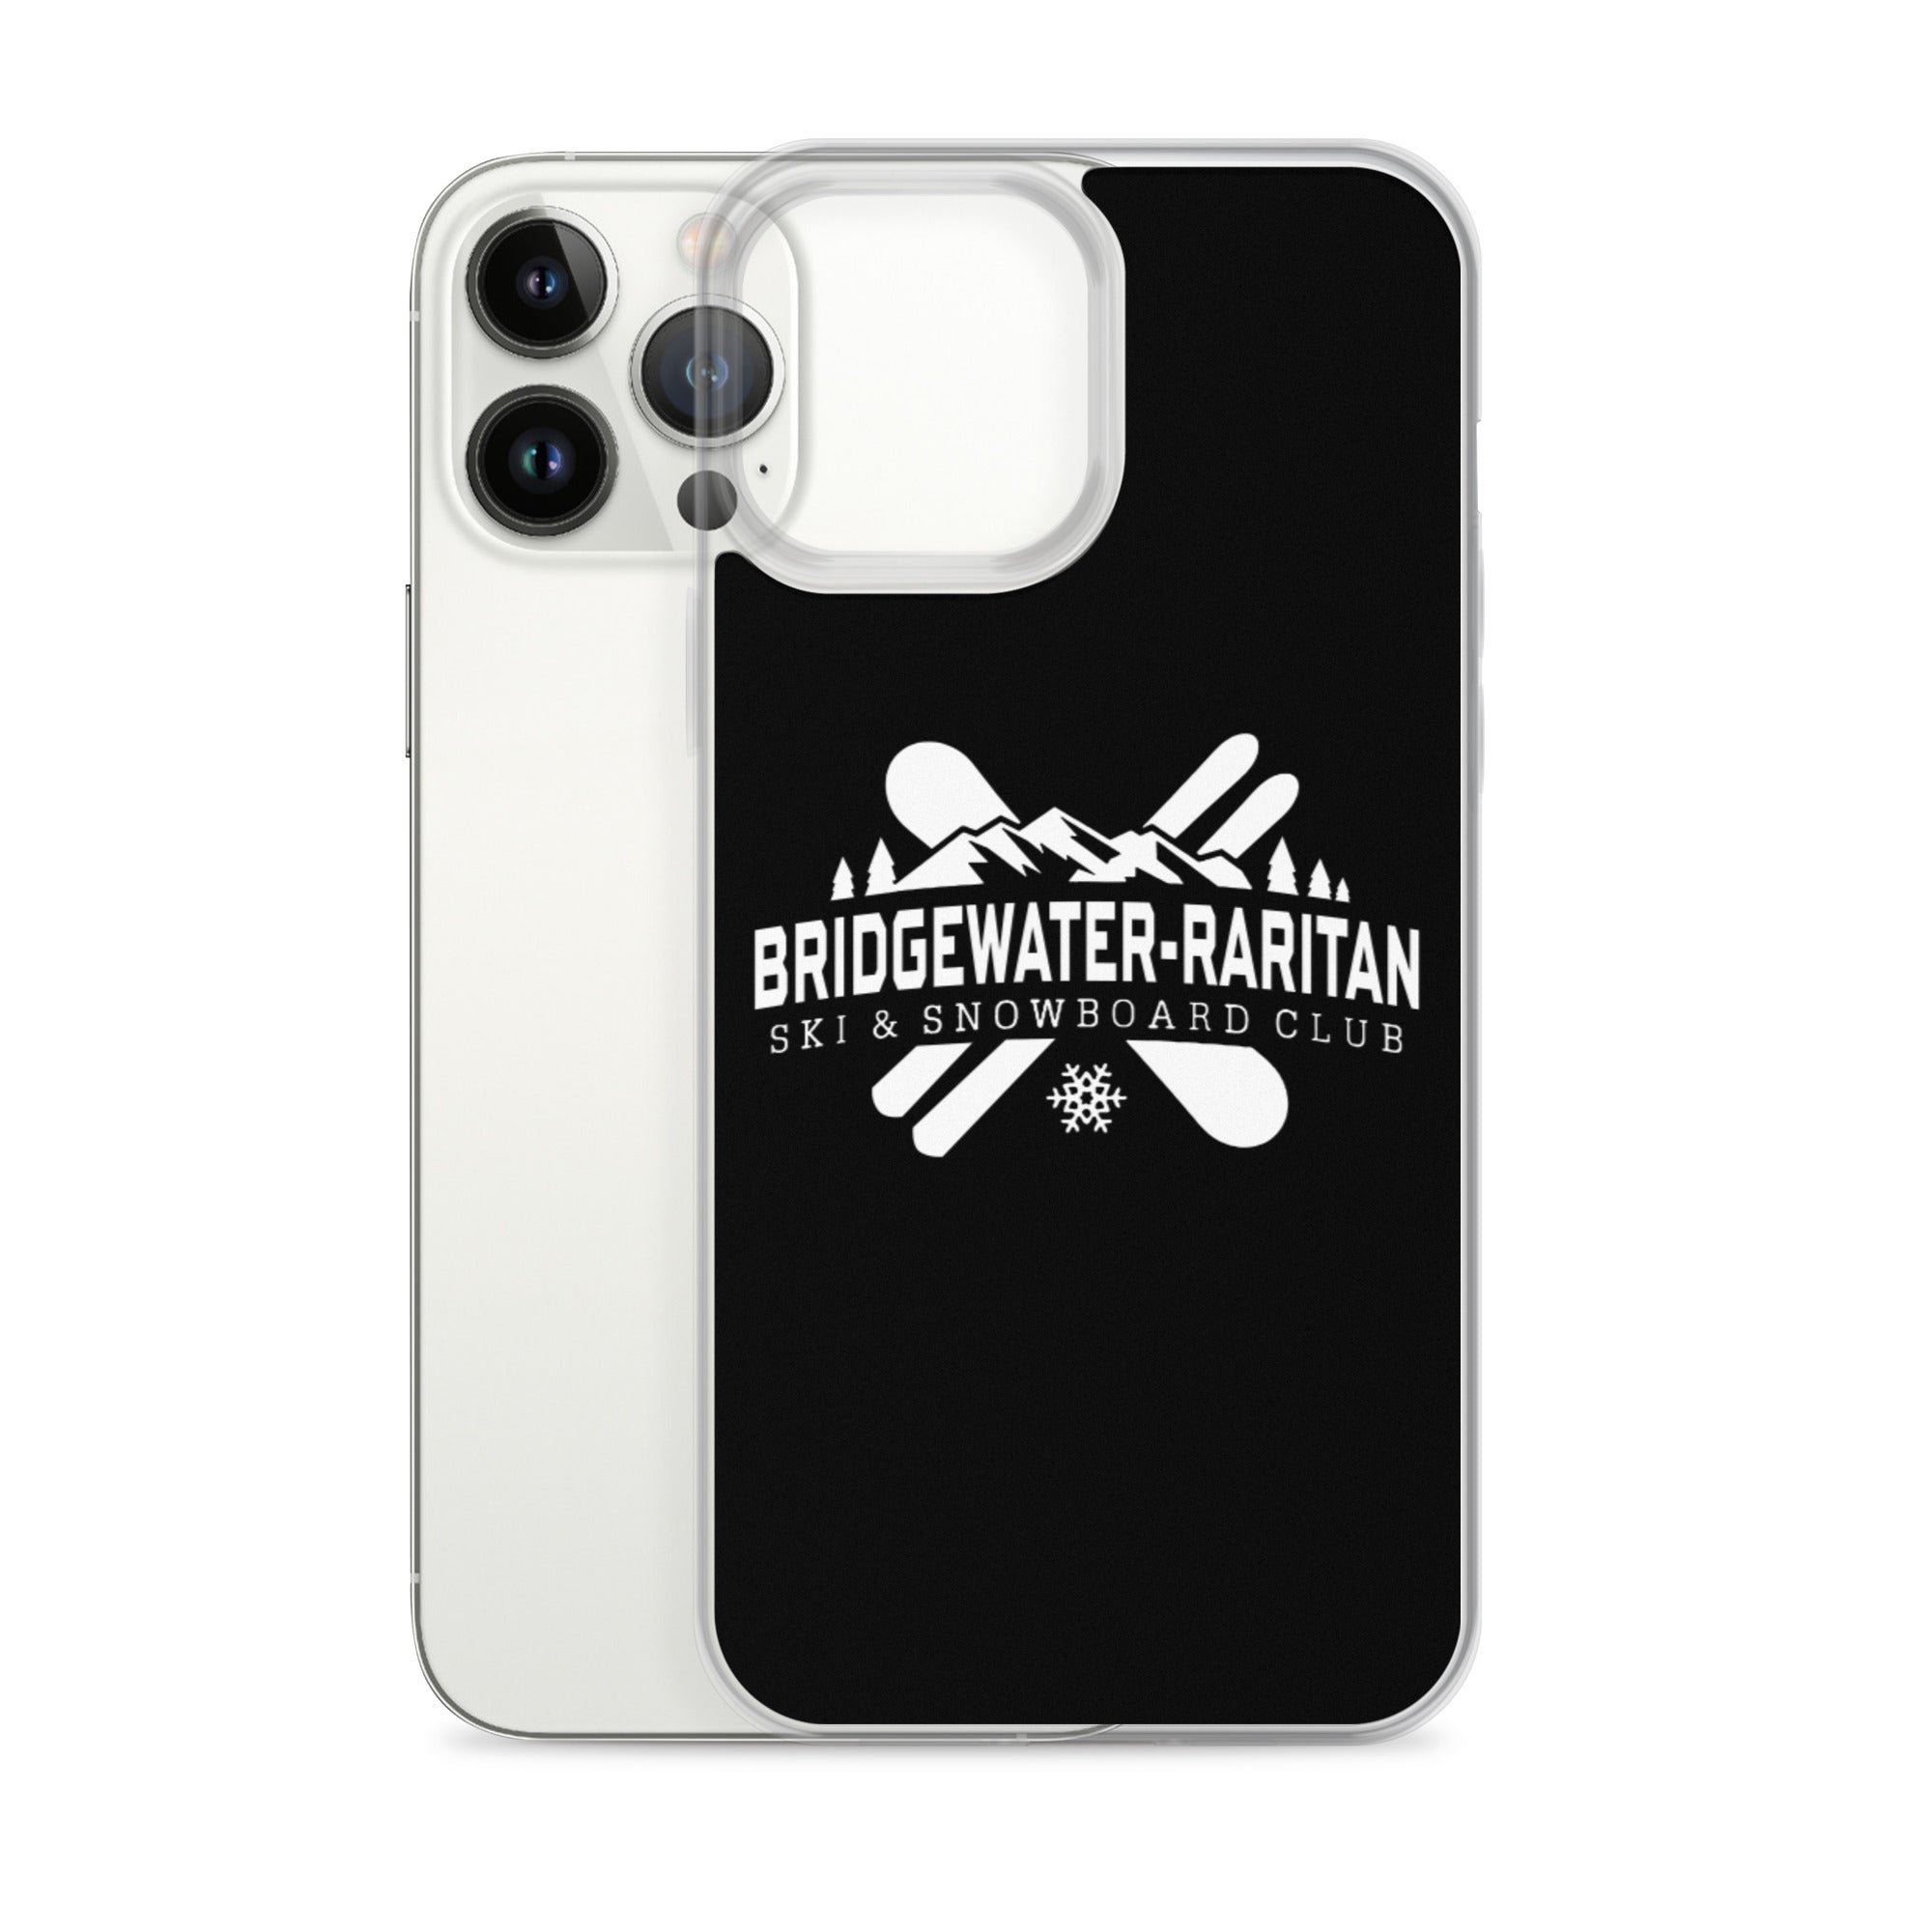 BRSC iPhone Case